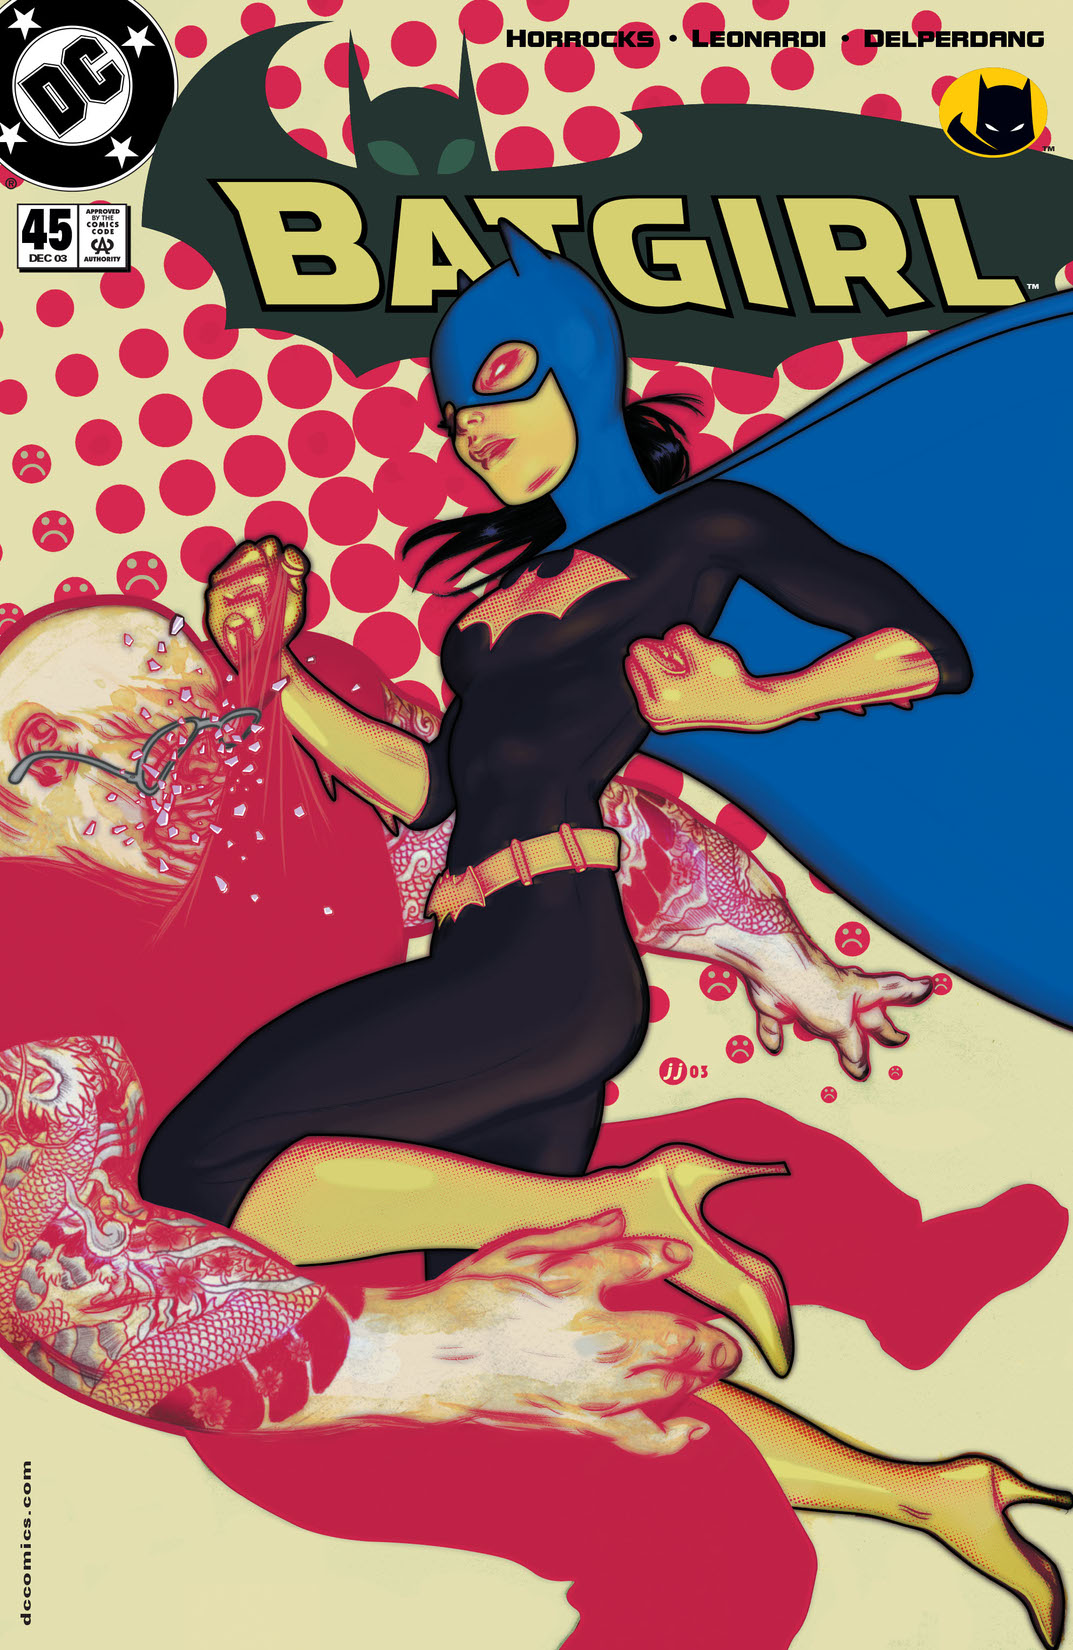 Batgirl (2000-) #45 preview images